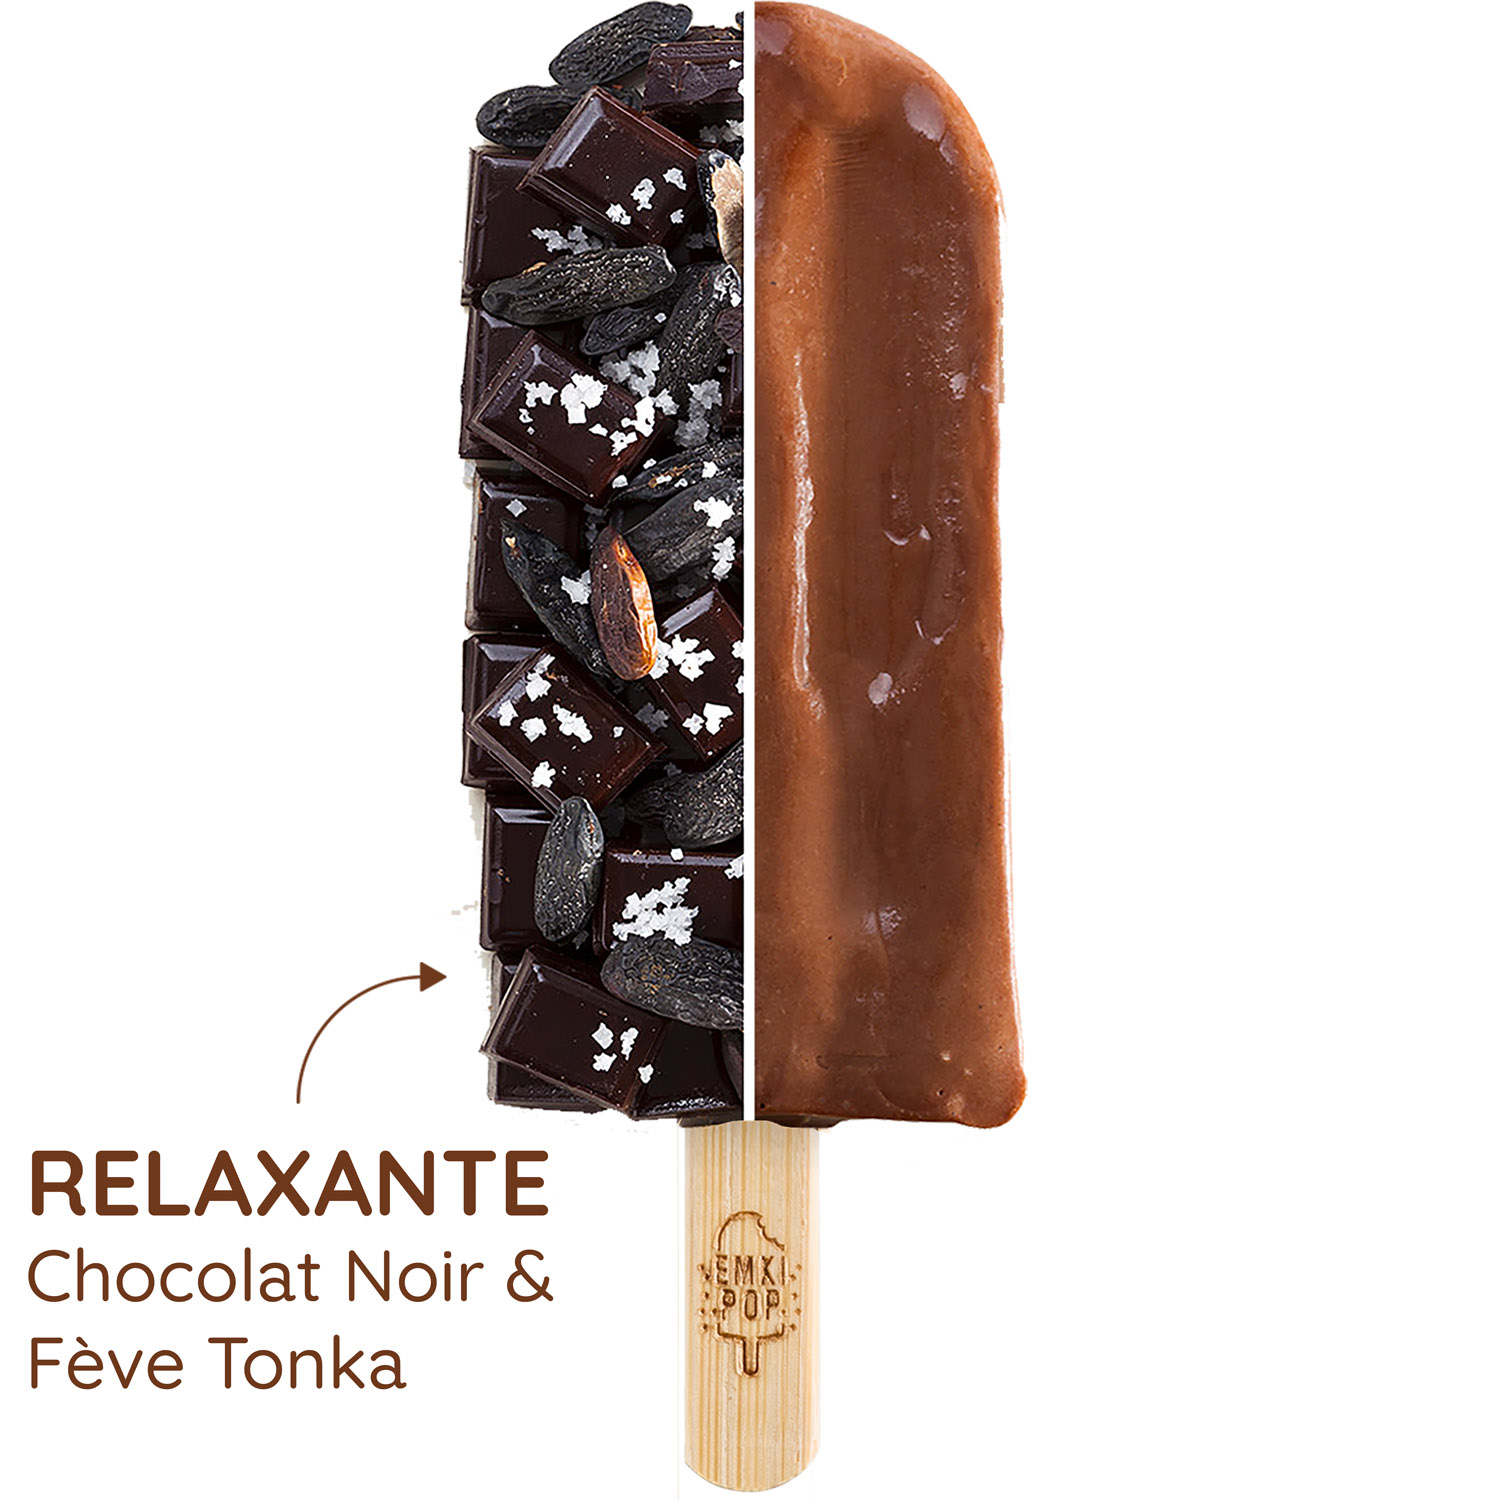 Relaxante - Chocolat Noir & Fève Tonka | Glace Artisanale